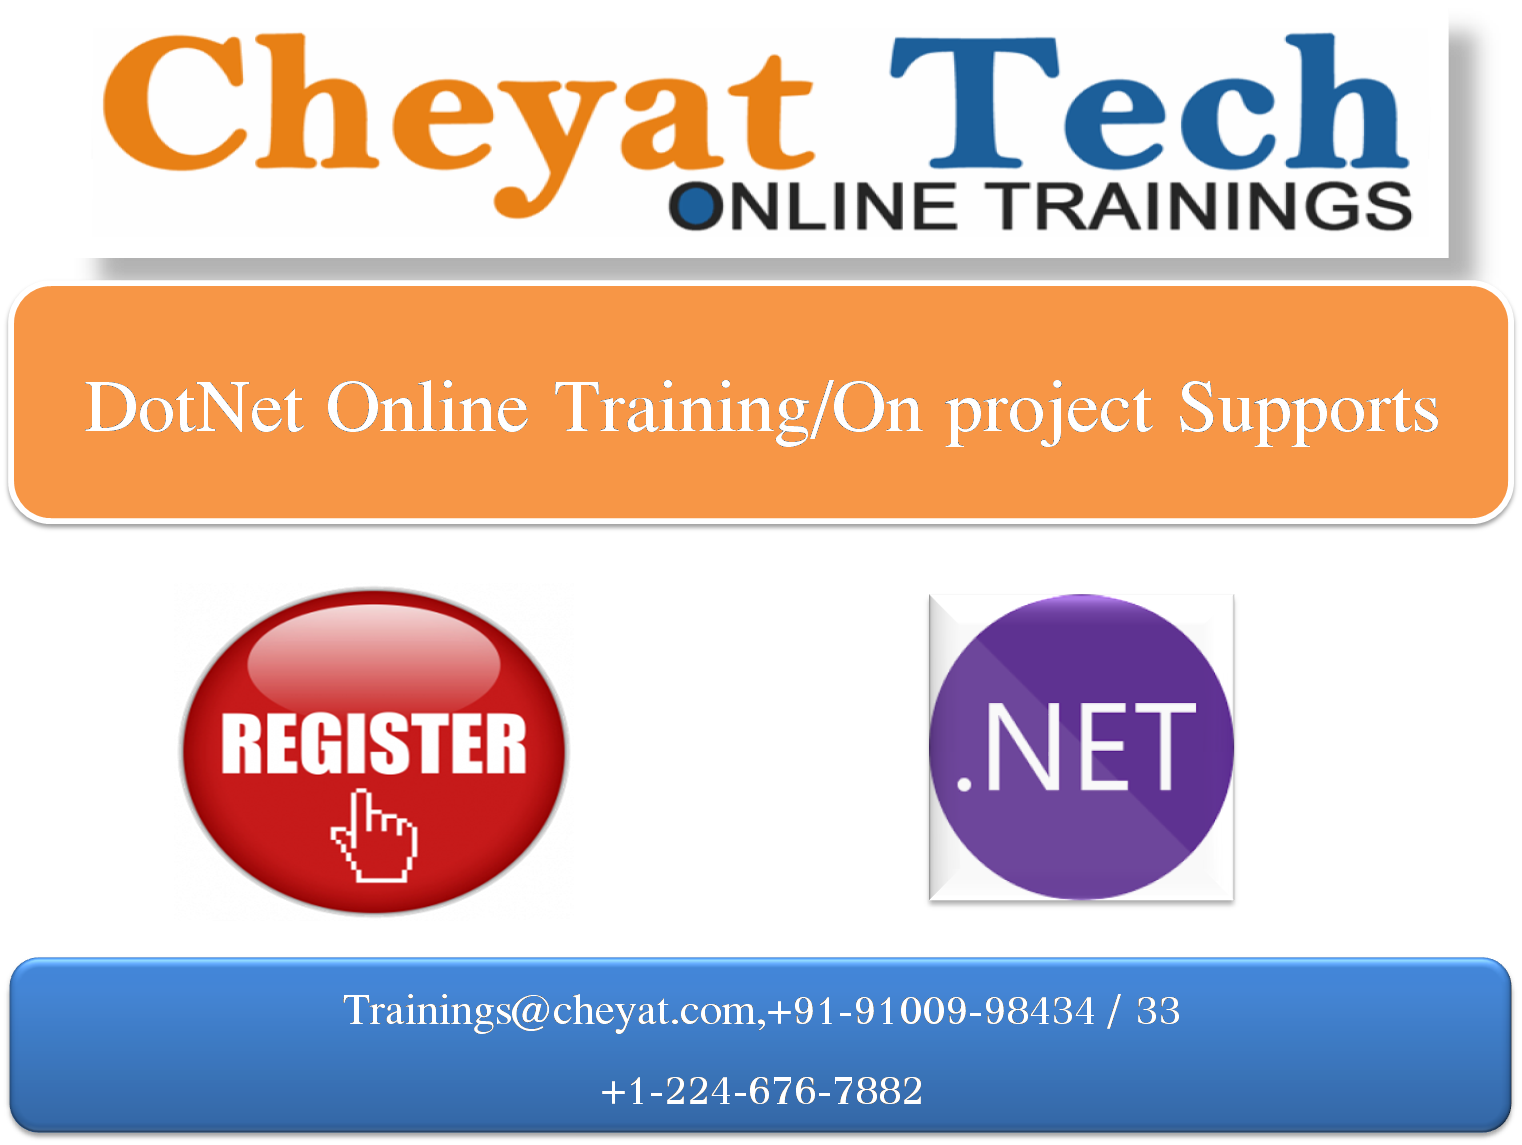 dotnet online training - cheyat tech - Img 1